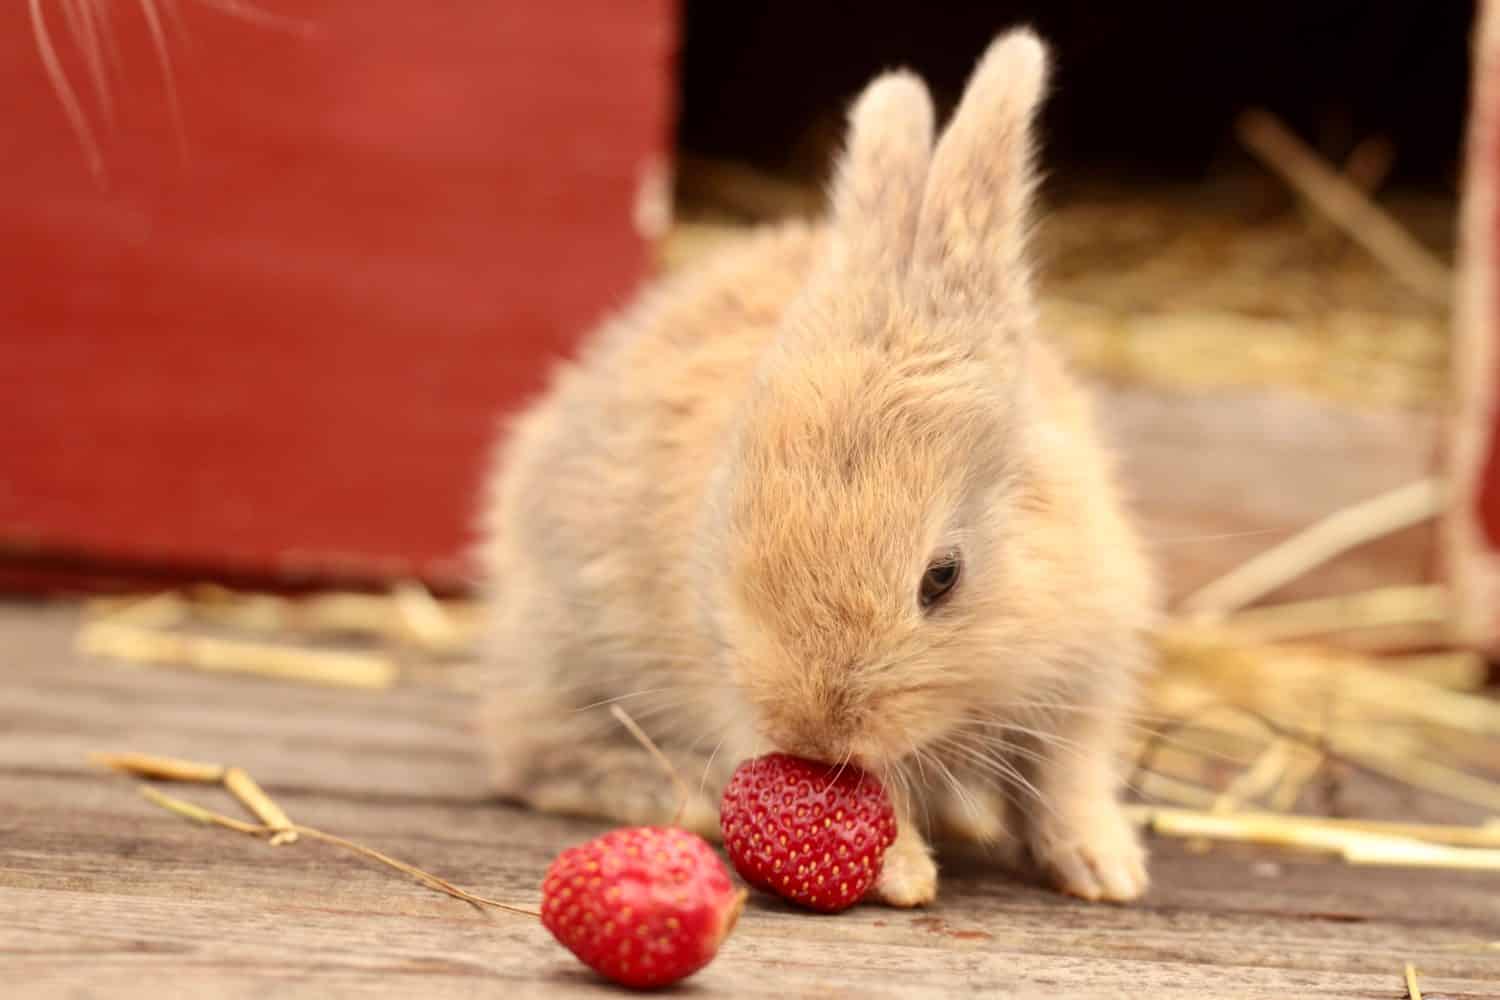 Baby Gotland rabbit eating a strawberry